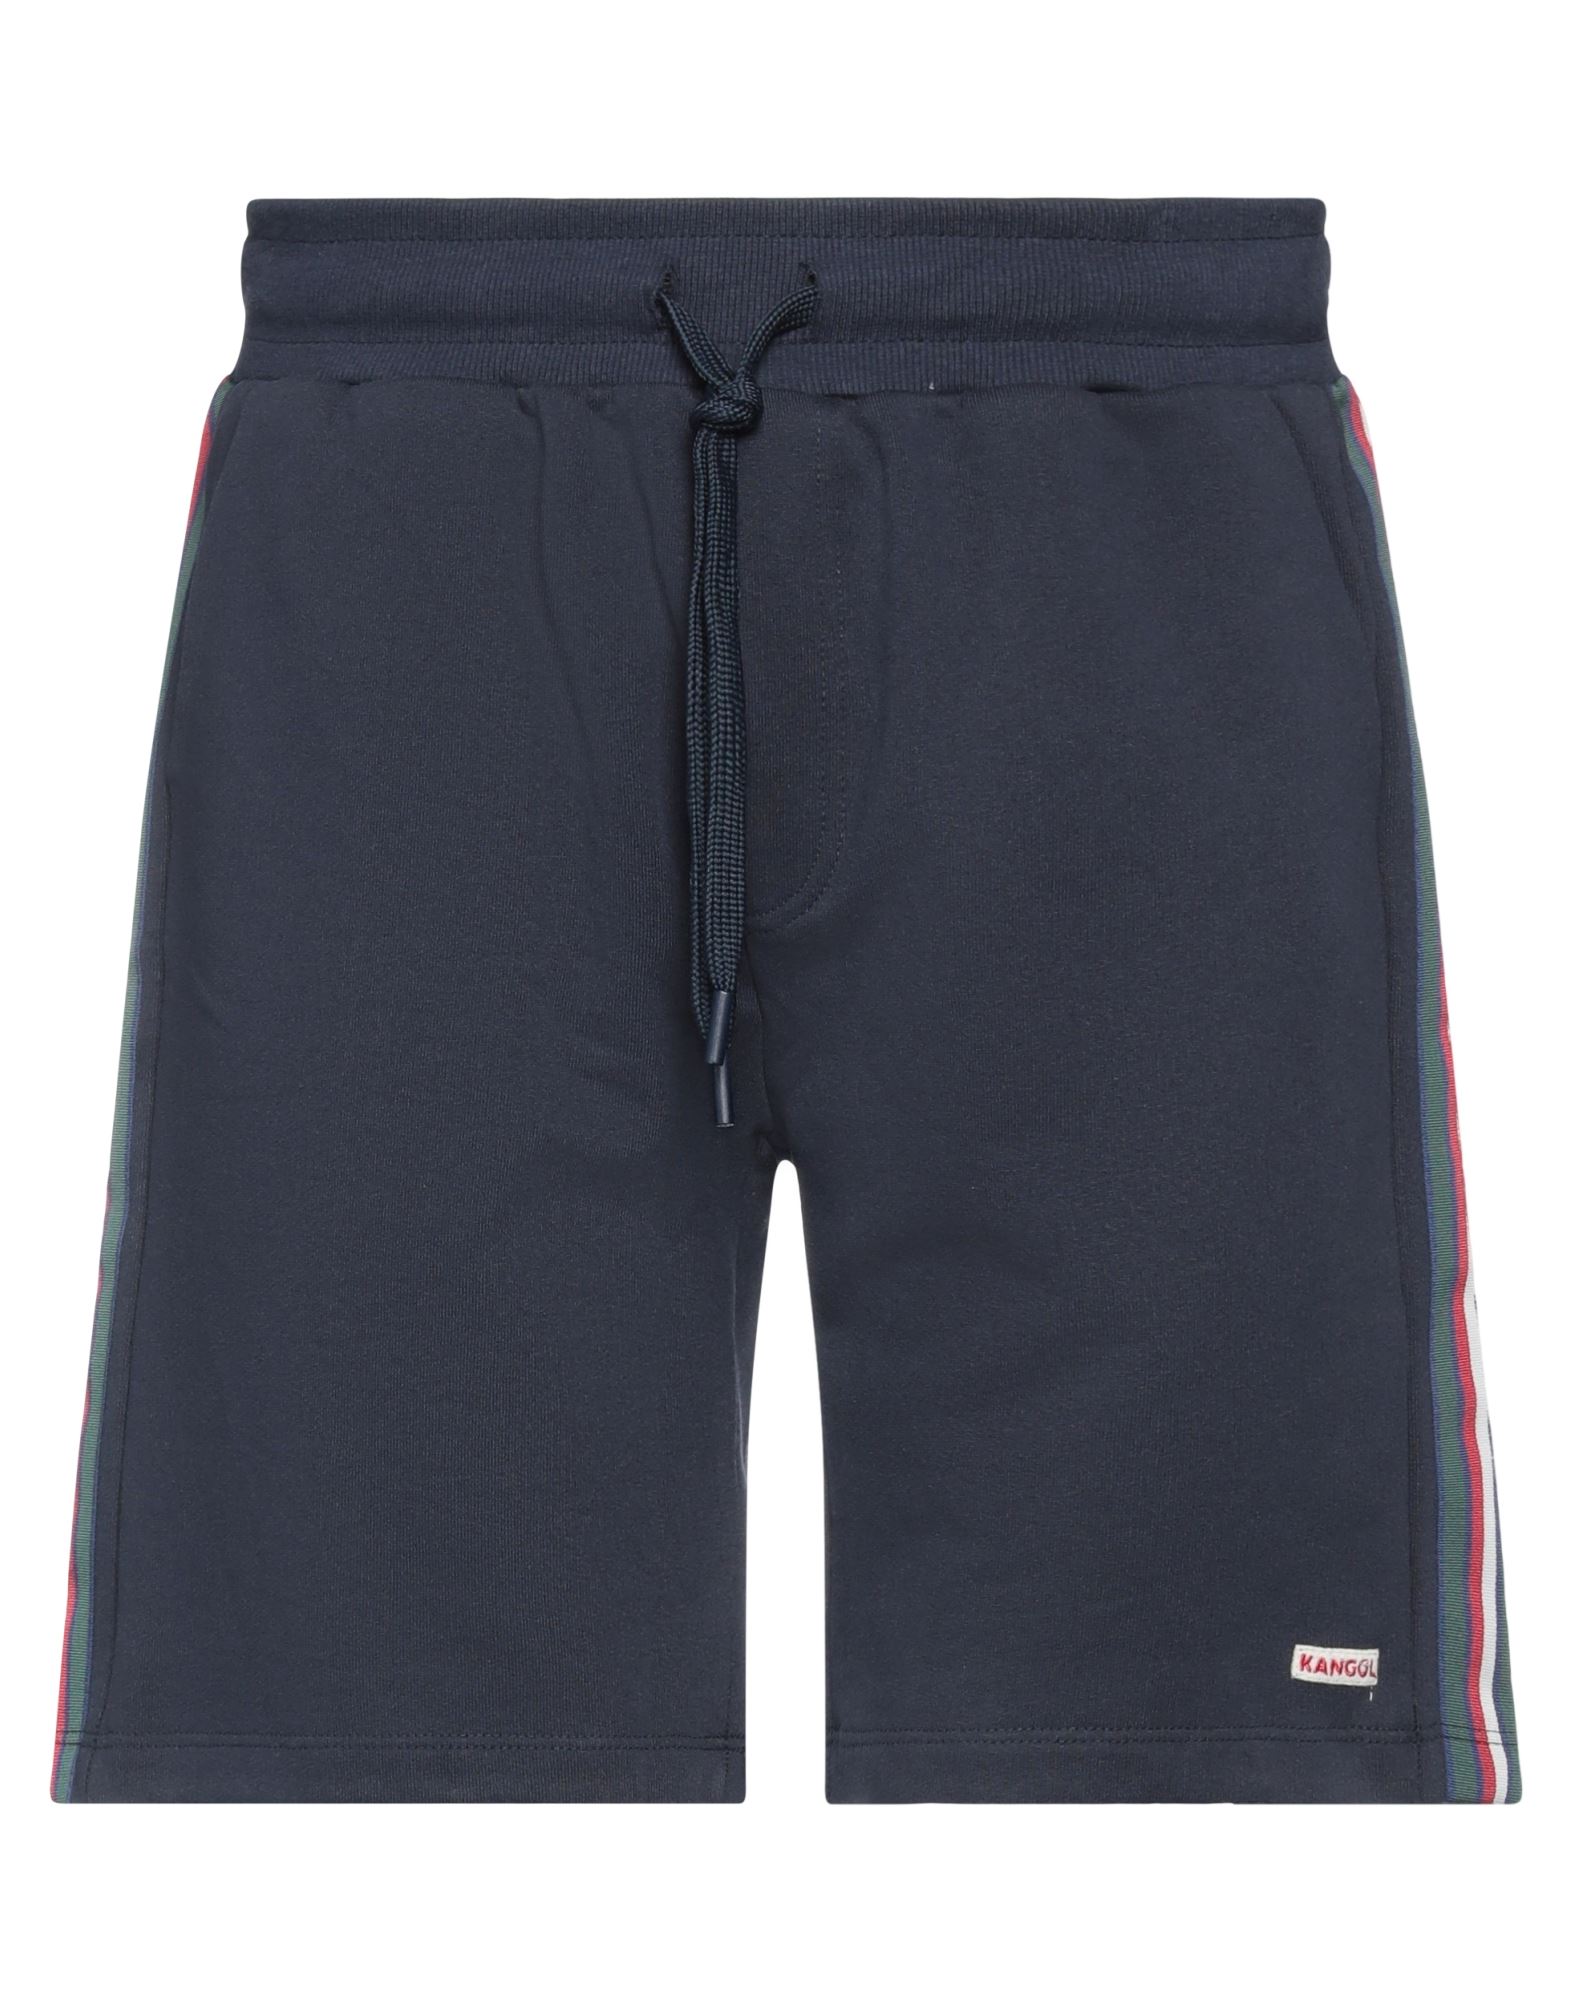 Kangol Man Shorts & Bermuda Shorts Midnight Blue Size Xl Cotton